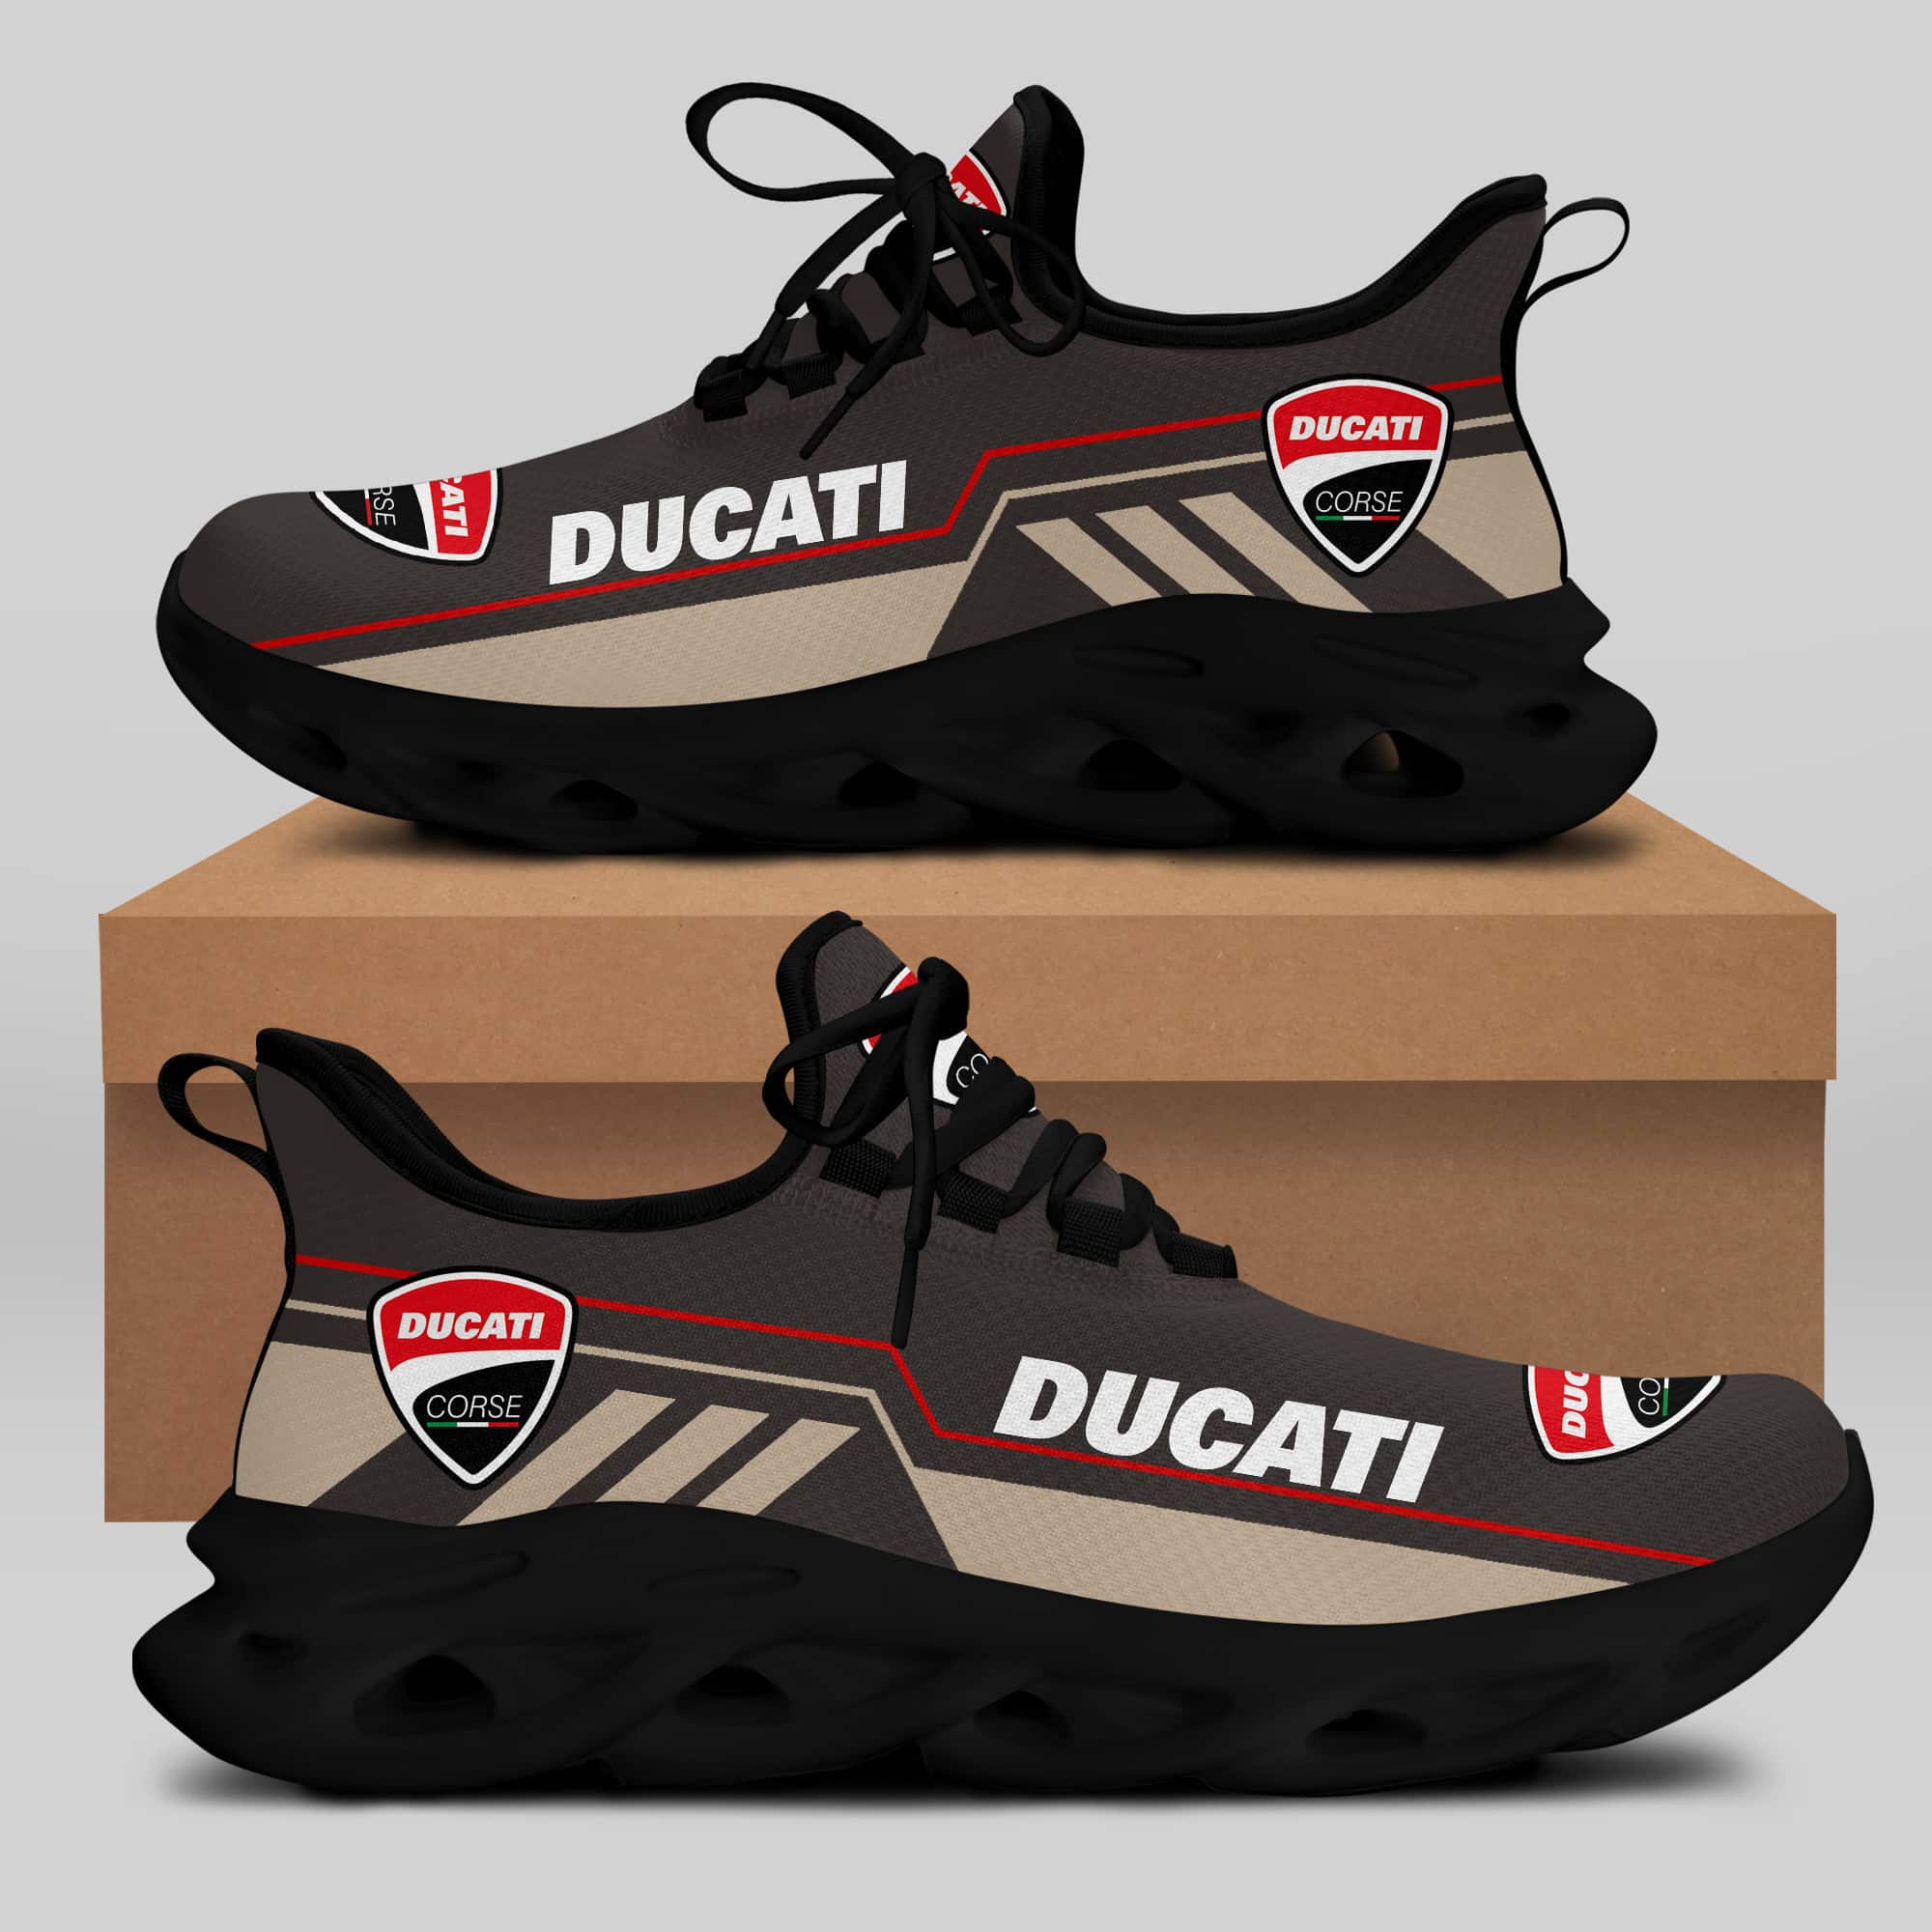 Ducati Racing Running Shoes Max Soul Shoes Sneakers Ver 23 1